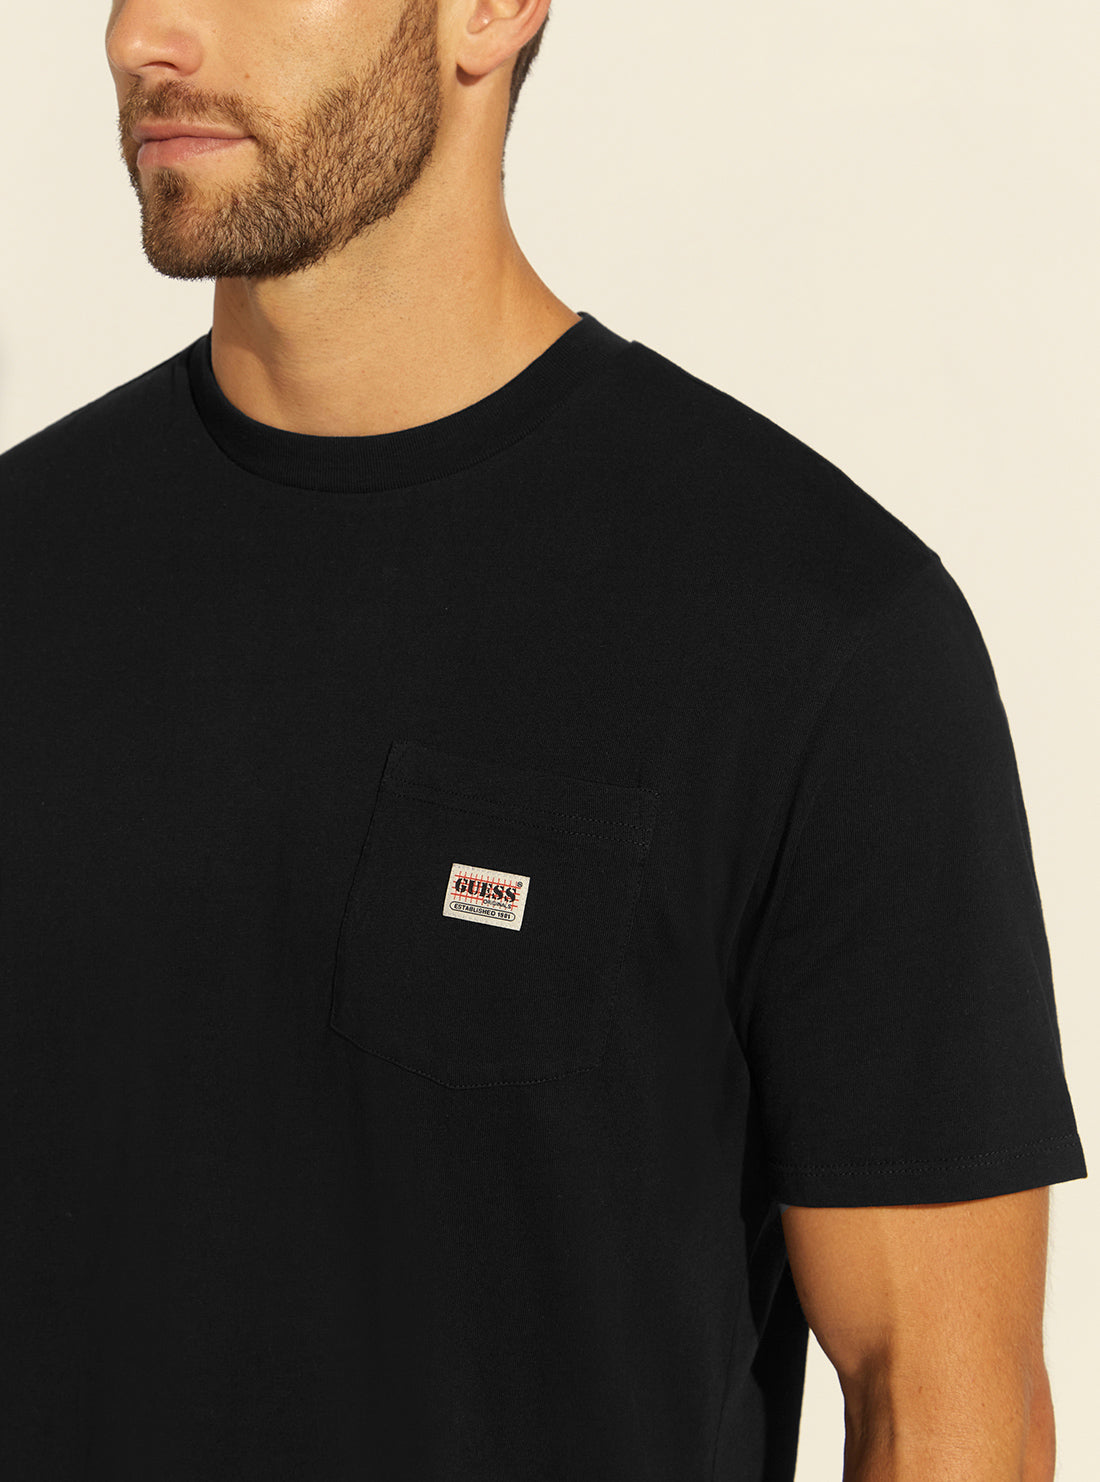 GUESS Mens GUESS Originals Black Pocket Label T-Shirt M1BI43K9XF1 Detail View